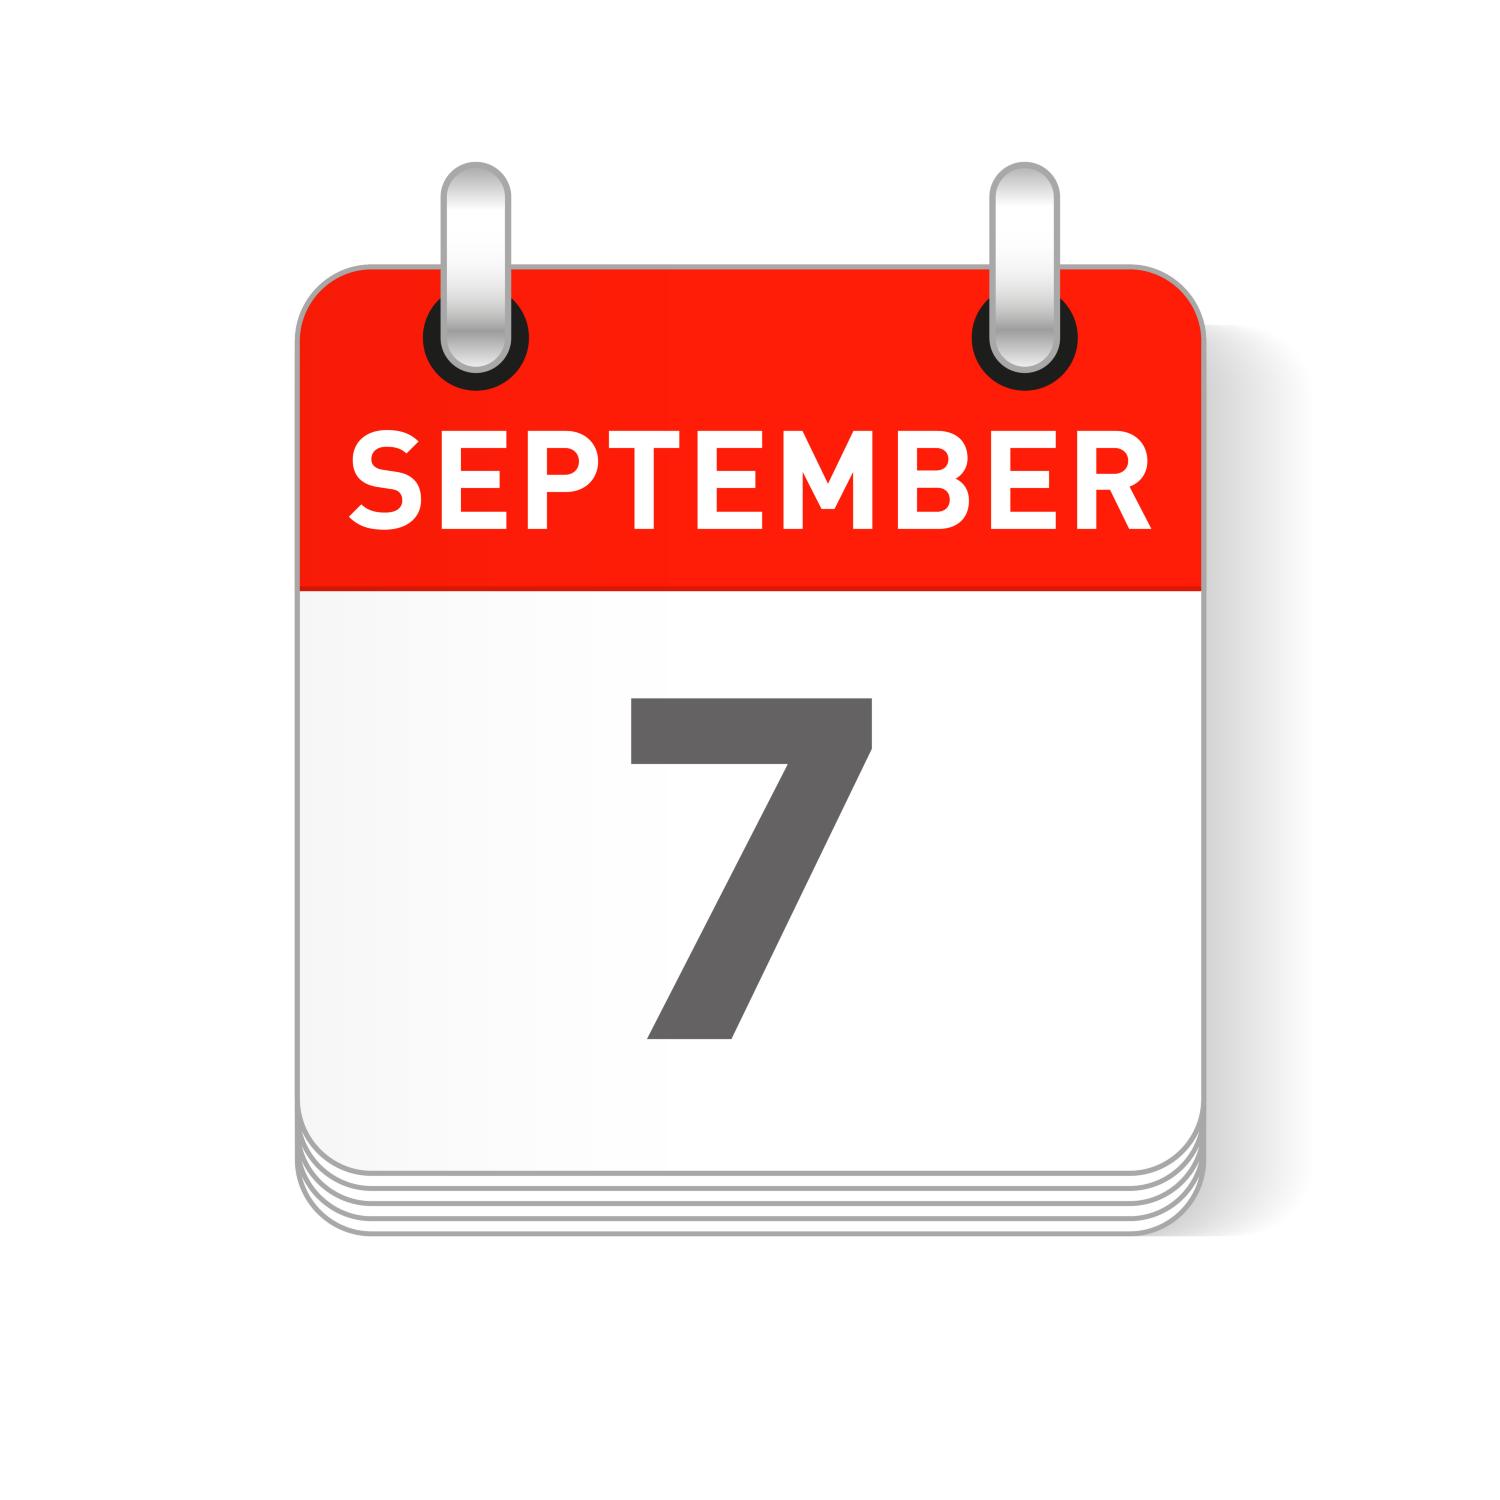 September 7 calendar date display